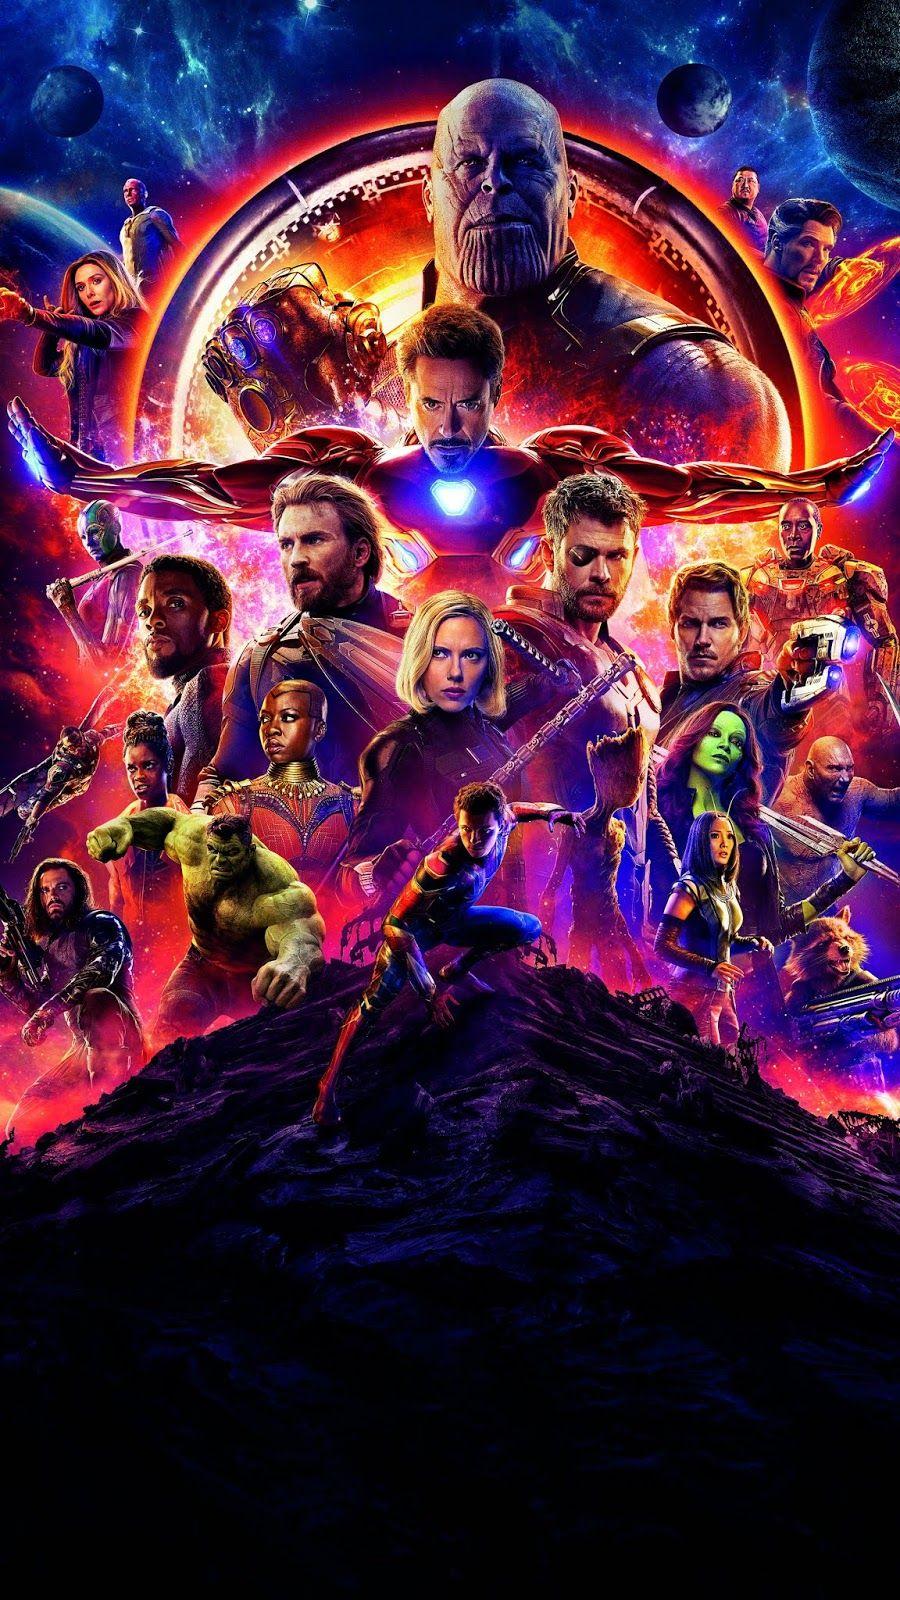 Avengers: Infinity War Textless HD Wallpaper. Avengers poster, Marvel background, Avengers picture